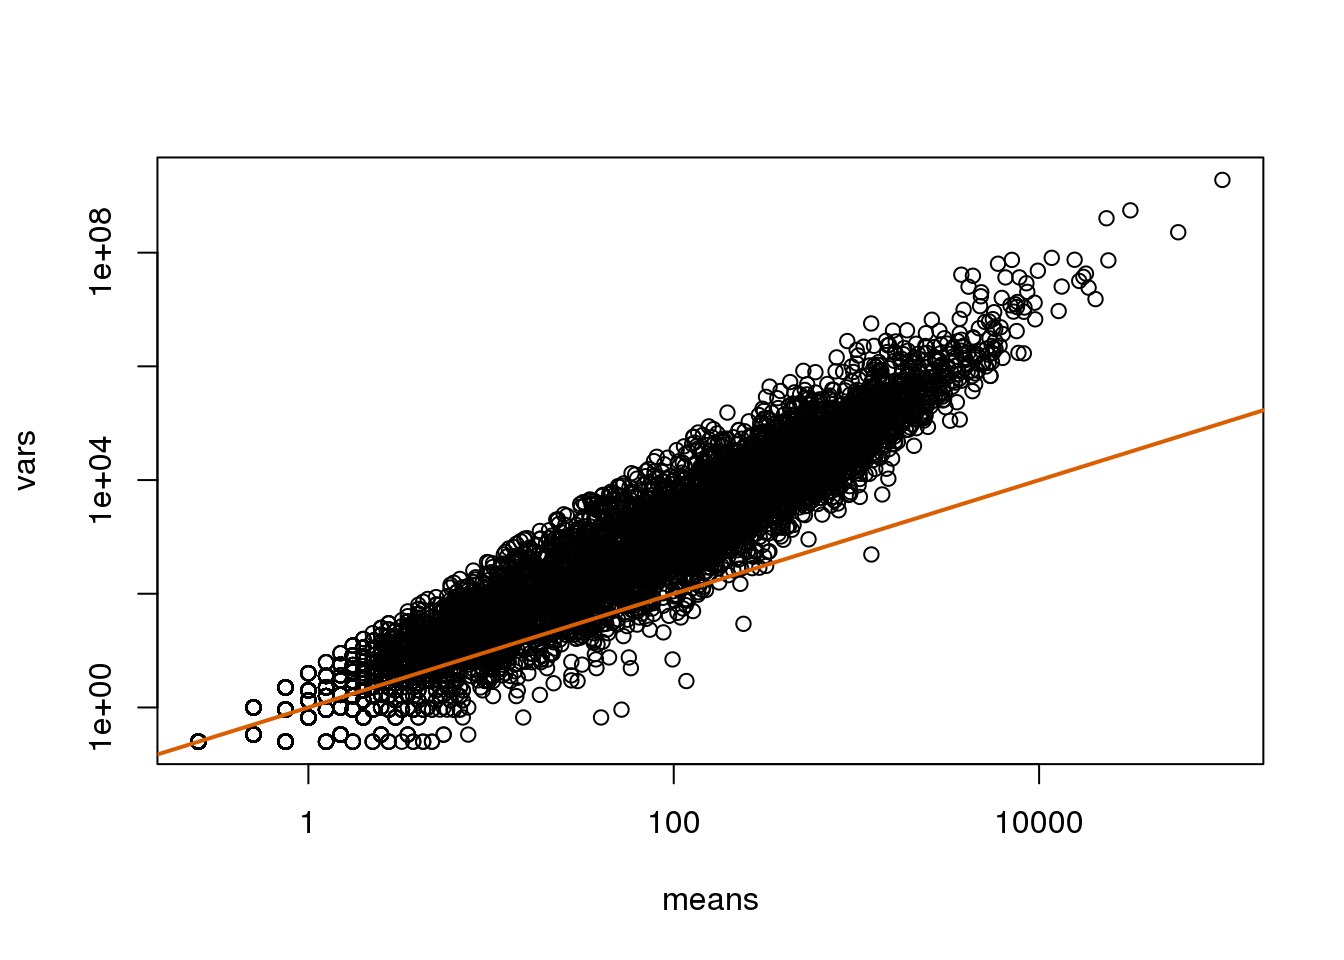 Variance versus mean plot. Summaries were obtained from the RNA-seq data.